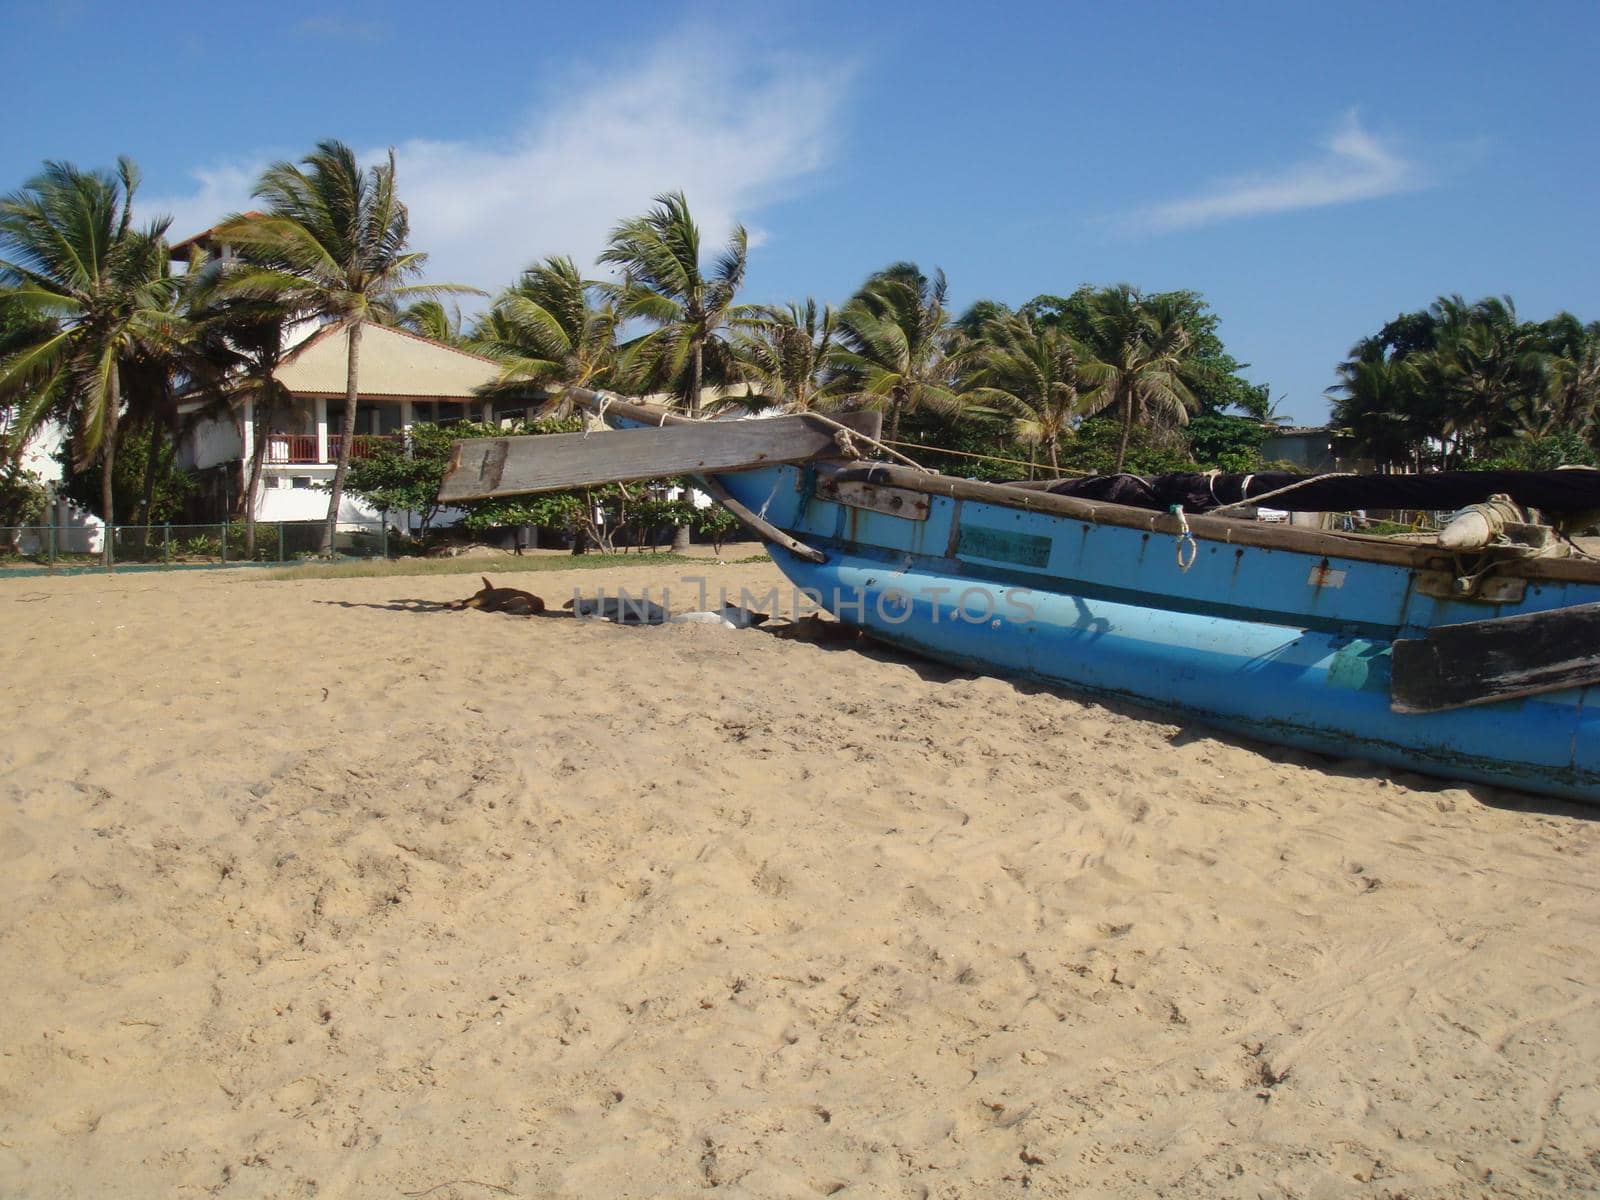 A catamaran fishing boat on a beach in Sri Lanka.